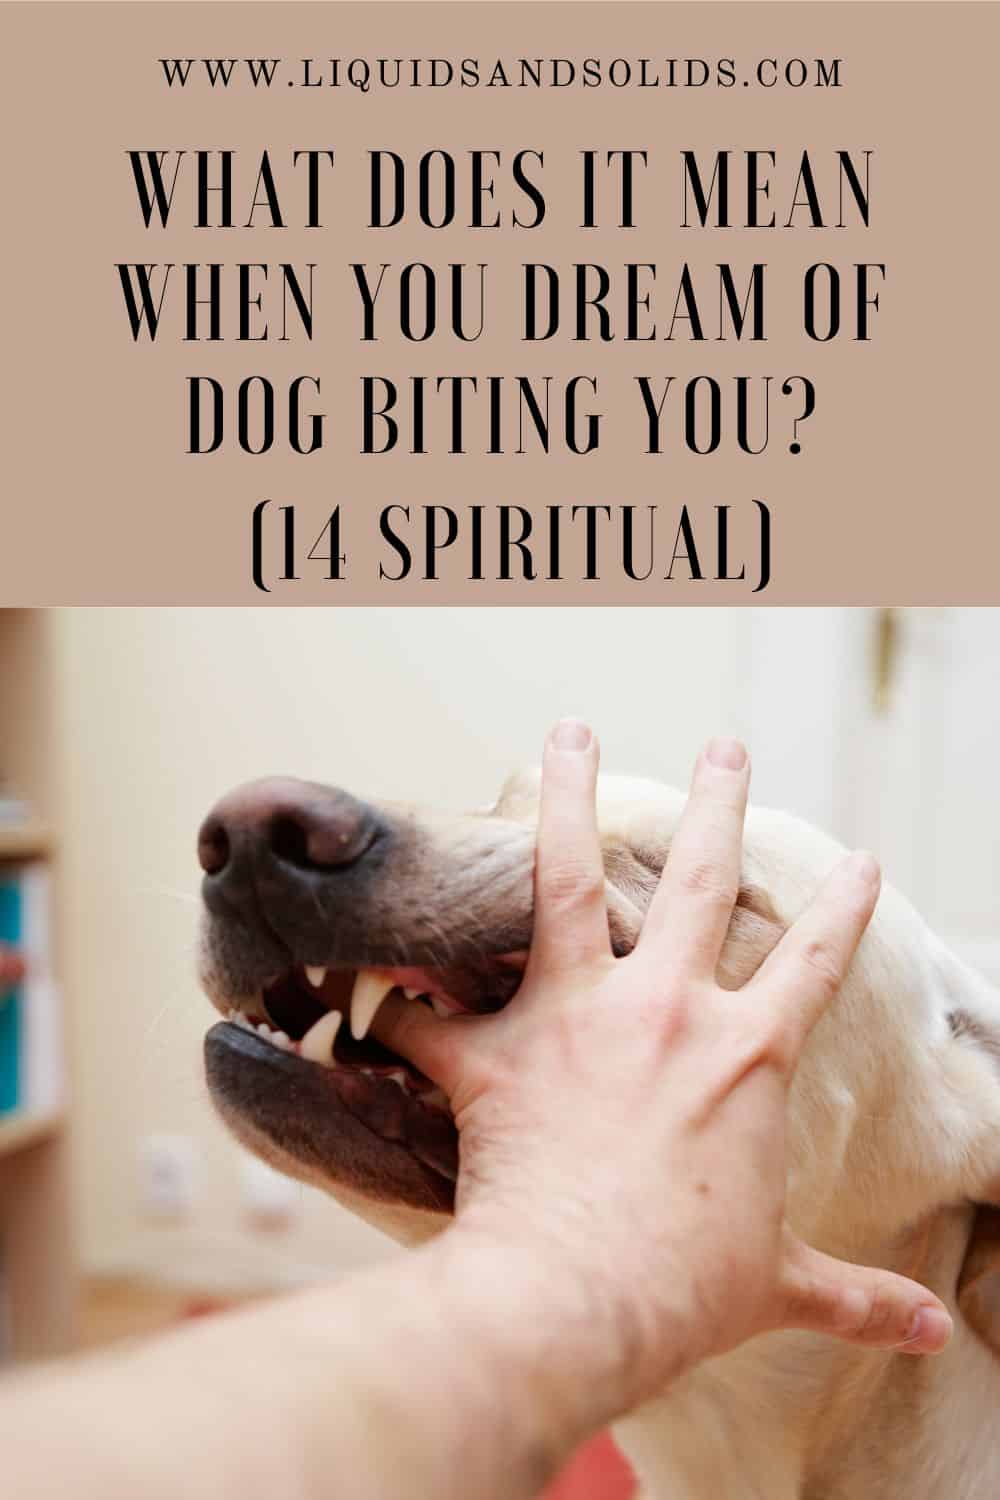  Dream Of Dog Biting You? (14 vaimset tähendust)